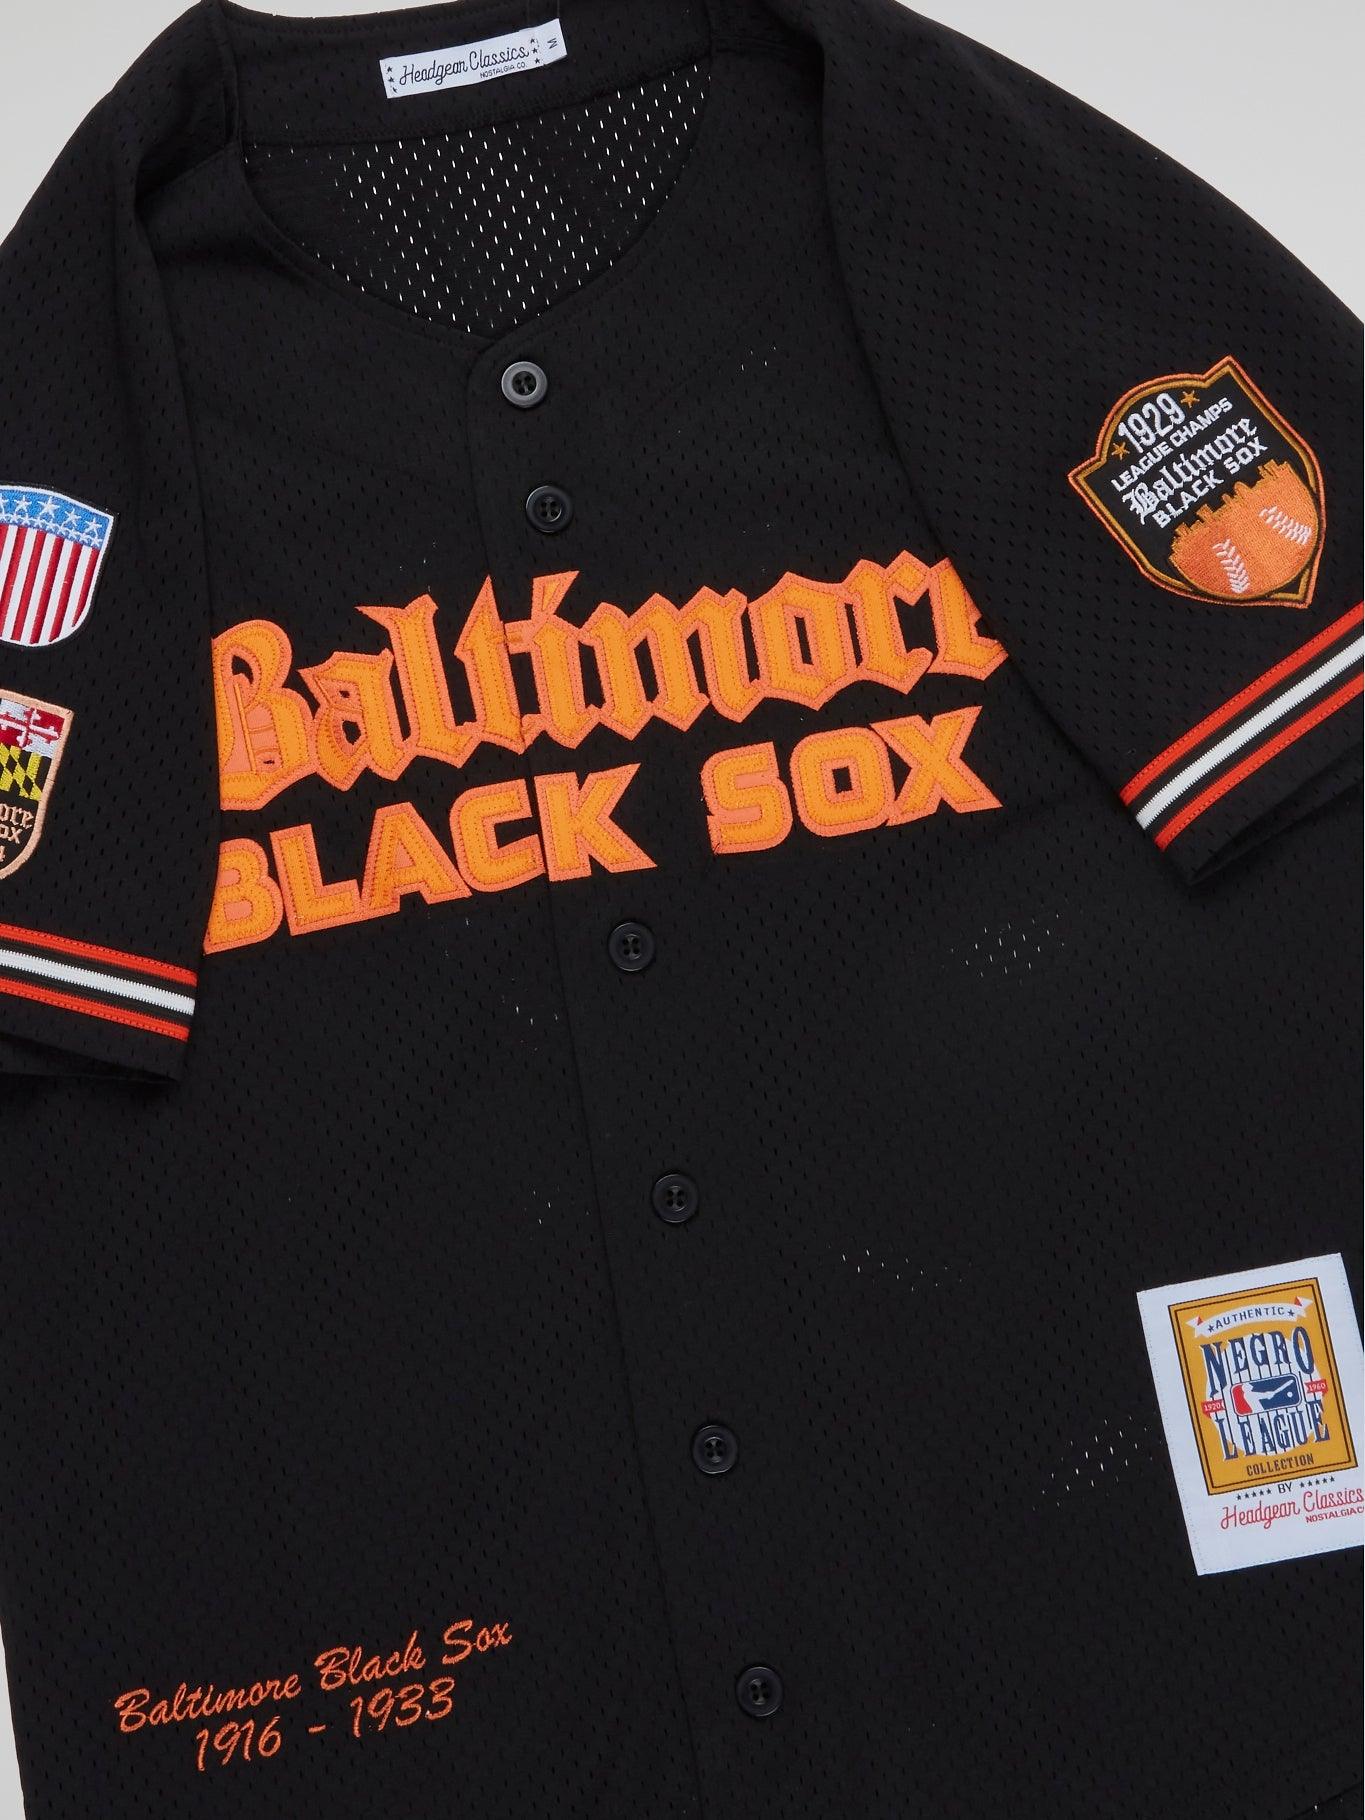 Headgear - Baltimore Black Sox Button Down Jersey Black